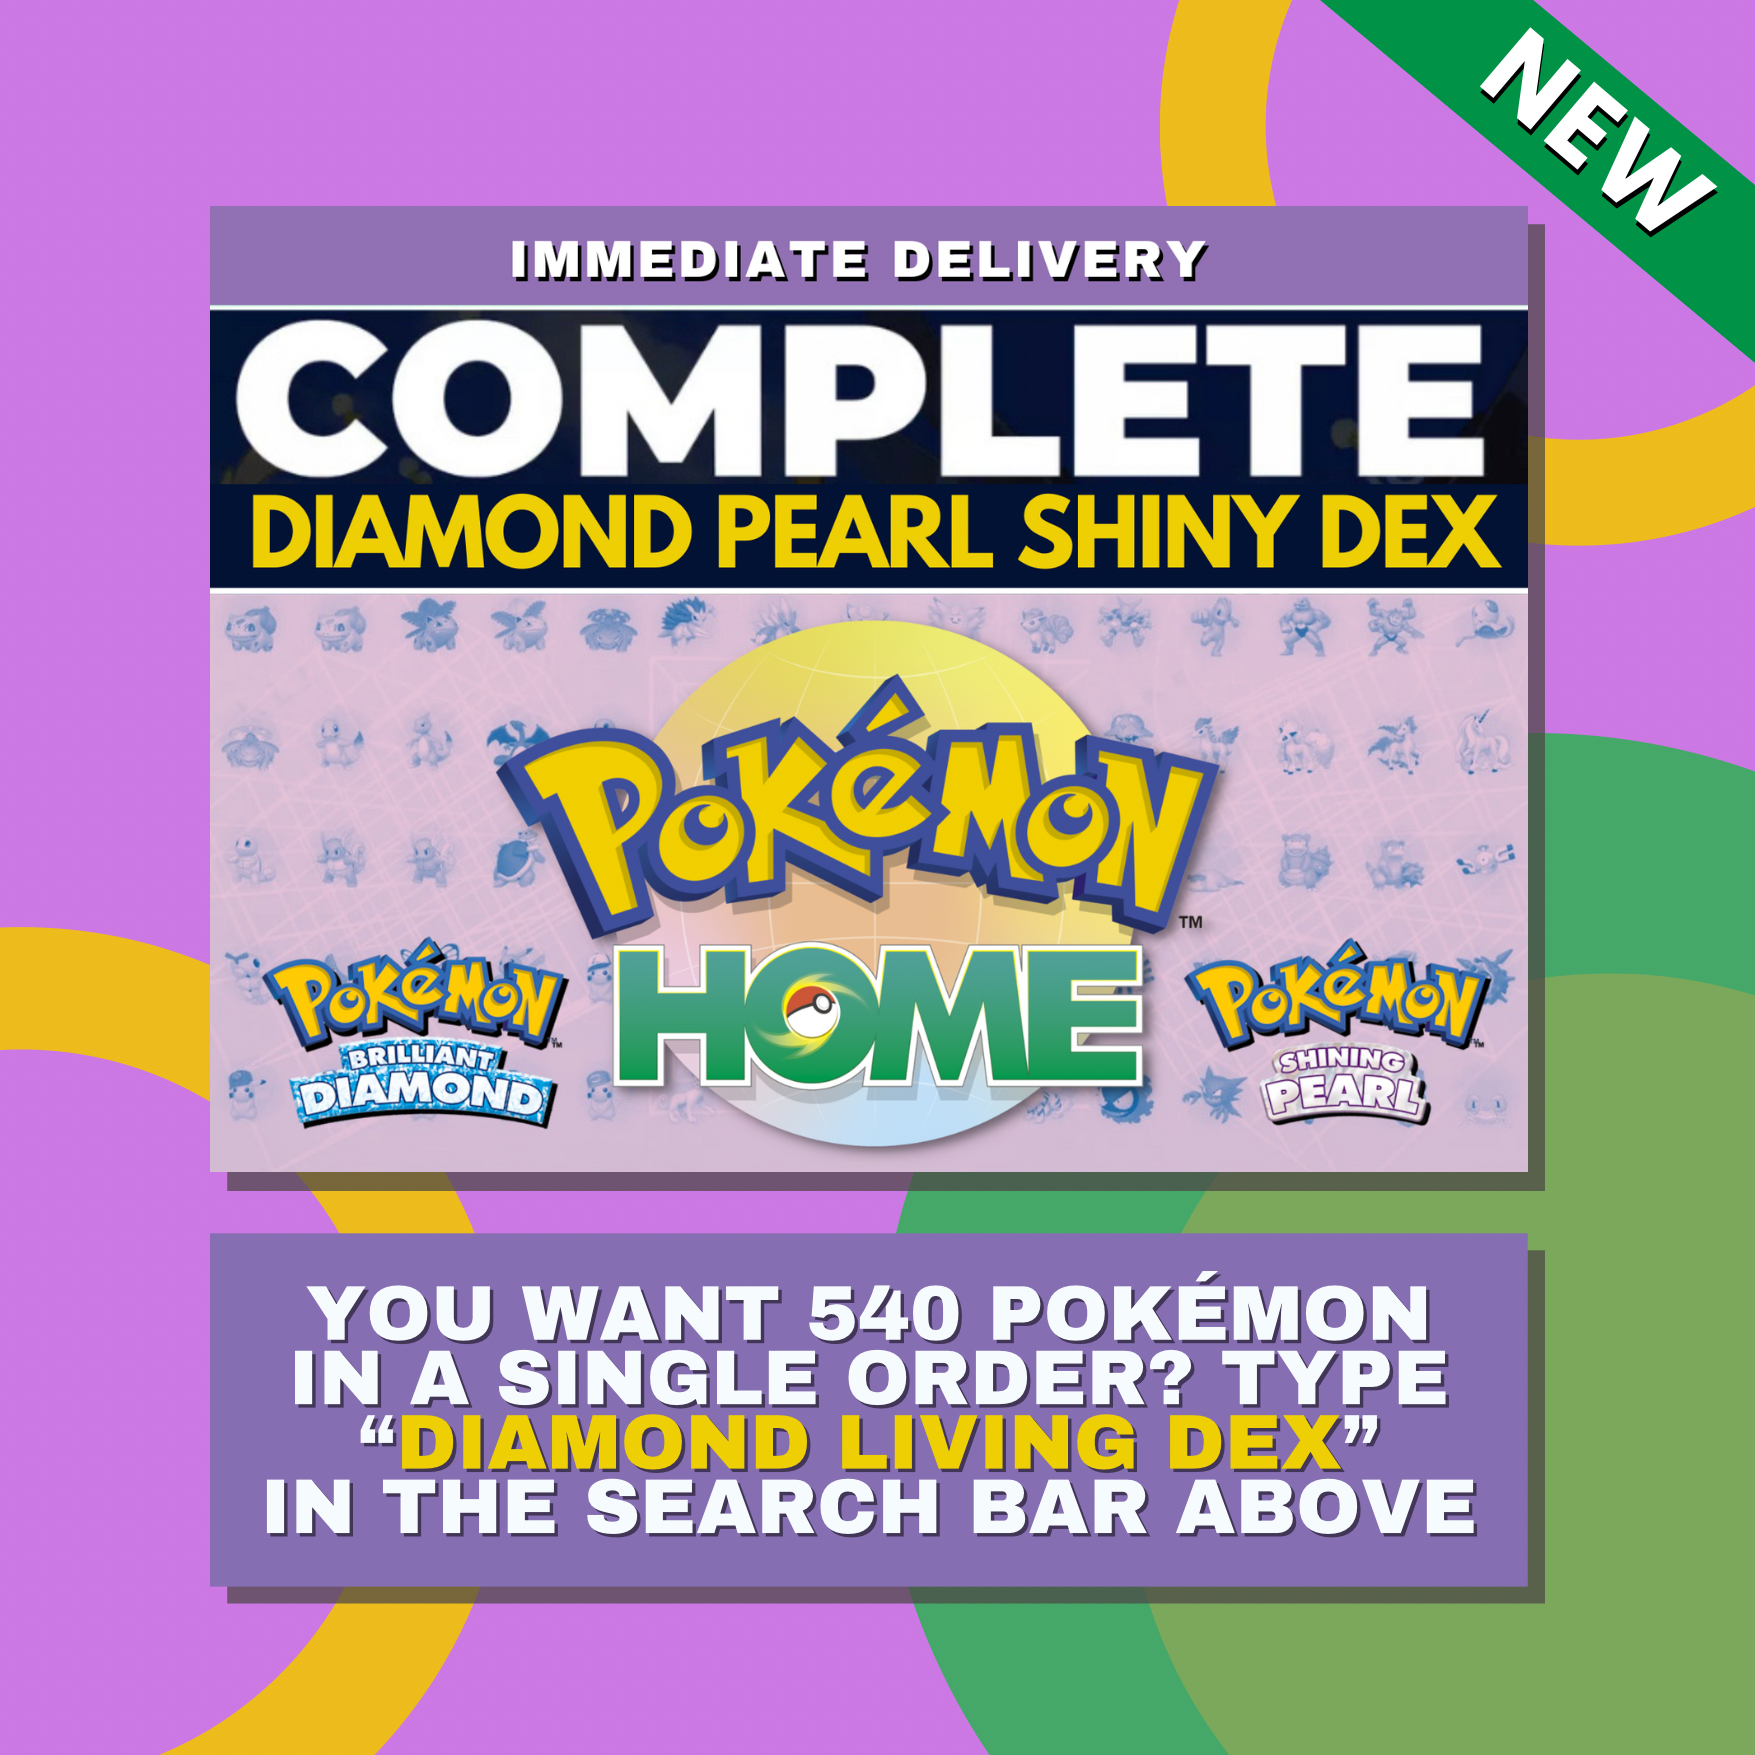 Moltres Shiny ✨ or Non Shiny Pokémon Brilliant Diamond Shining Pearl Battle Ready 6 IV Competitive 100% Legit Level 100 Customizable Custom OT by Shiny Living Dex | Shiny Living Dex